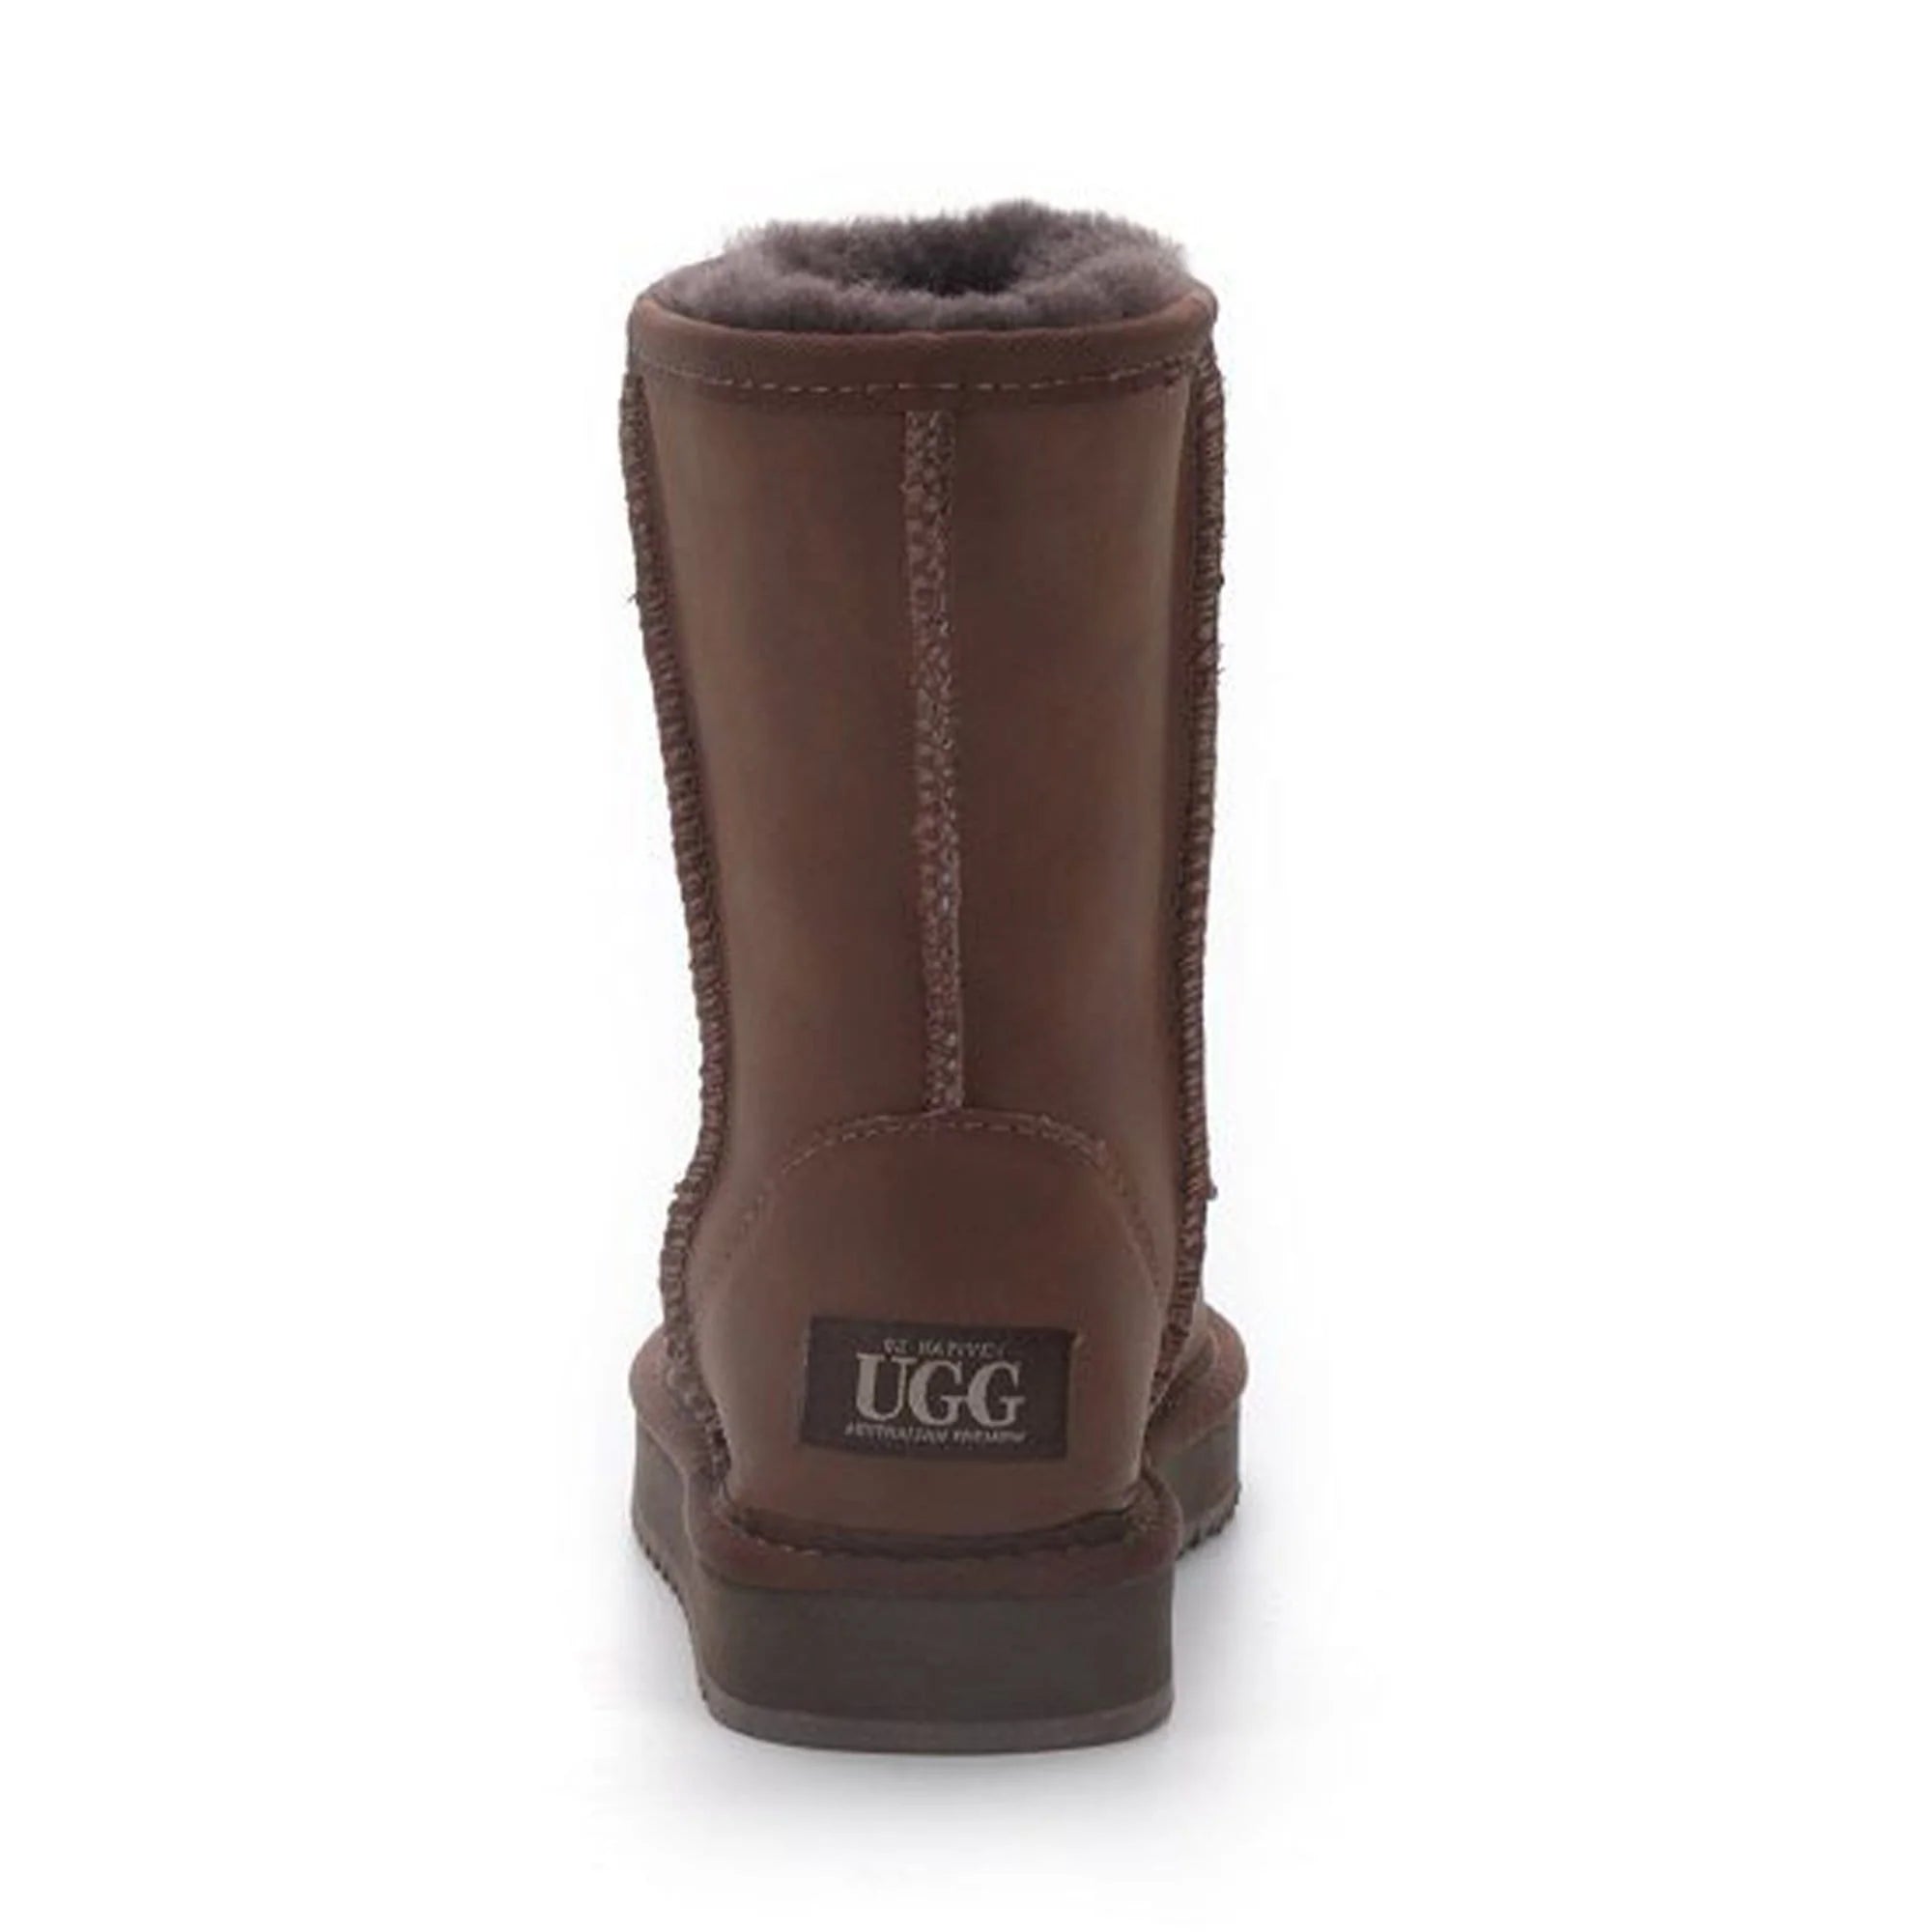 Ugg Boots - UGG Short Classic Nappa - Original UGG Australia Classic